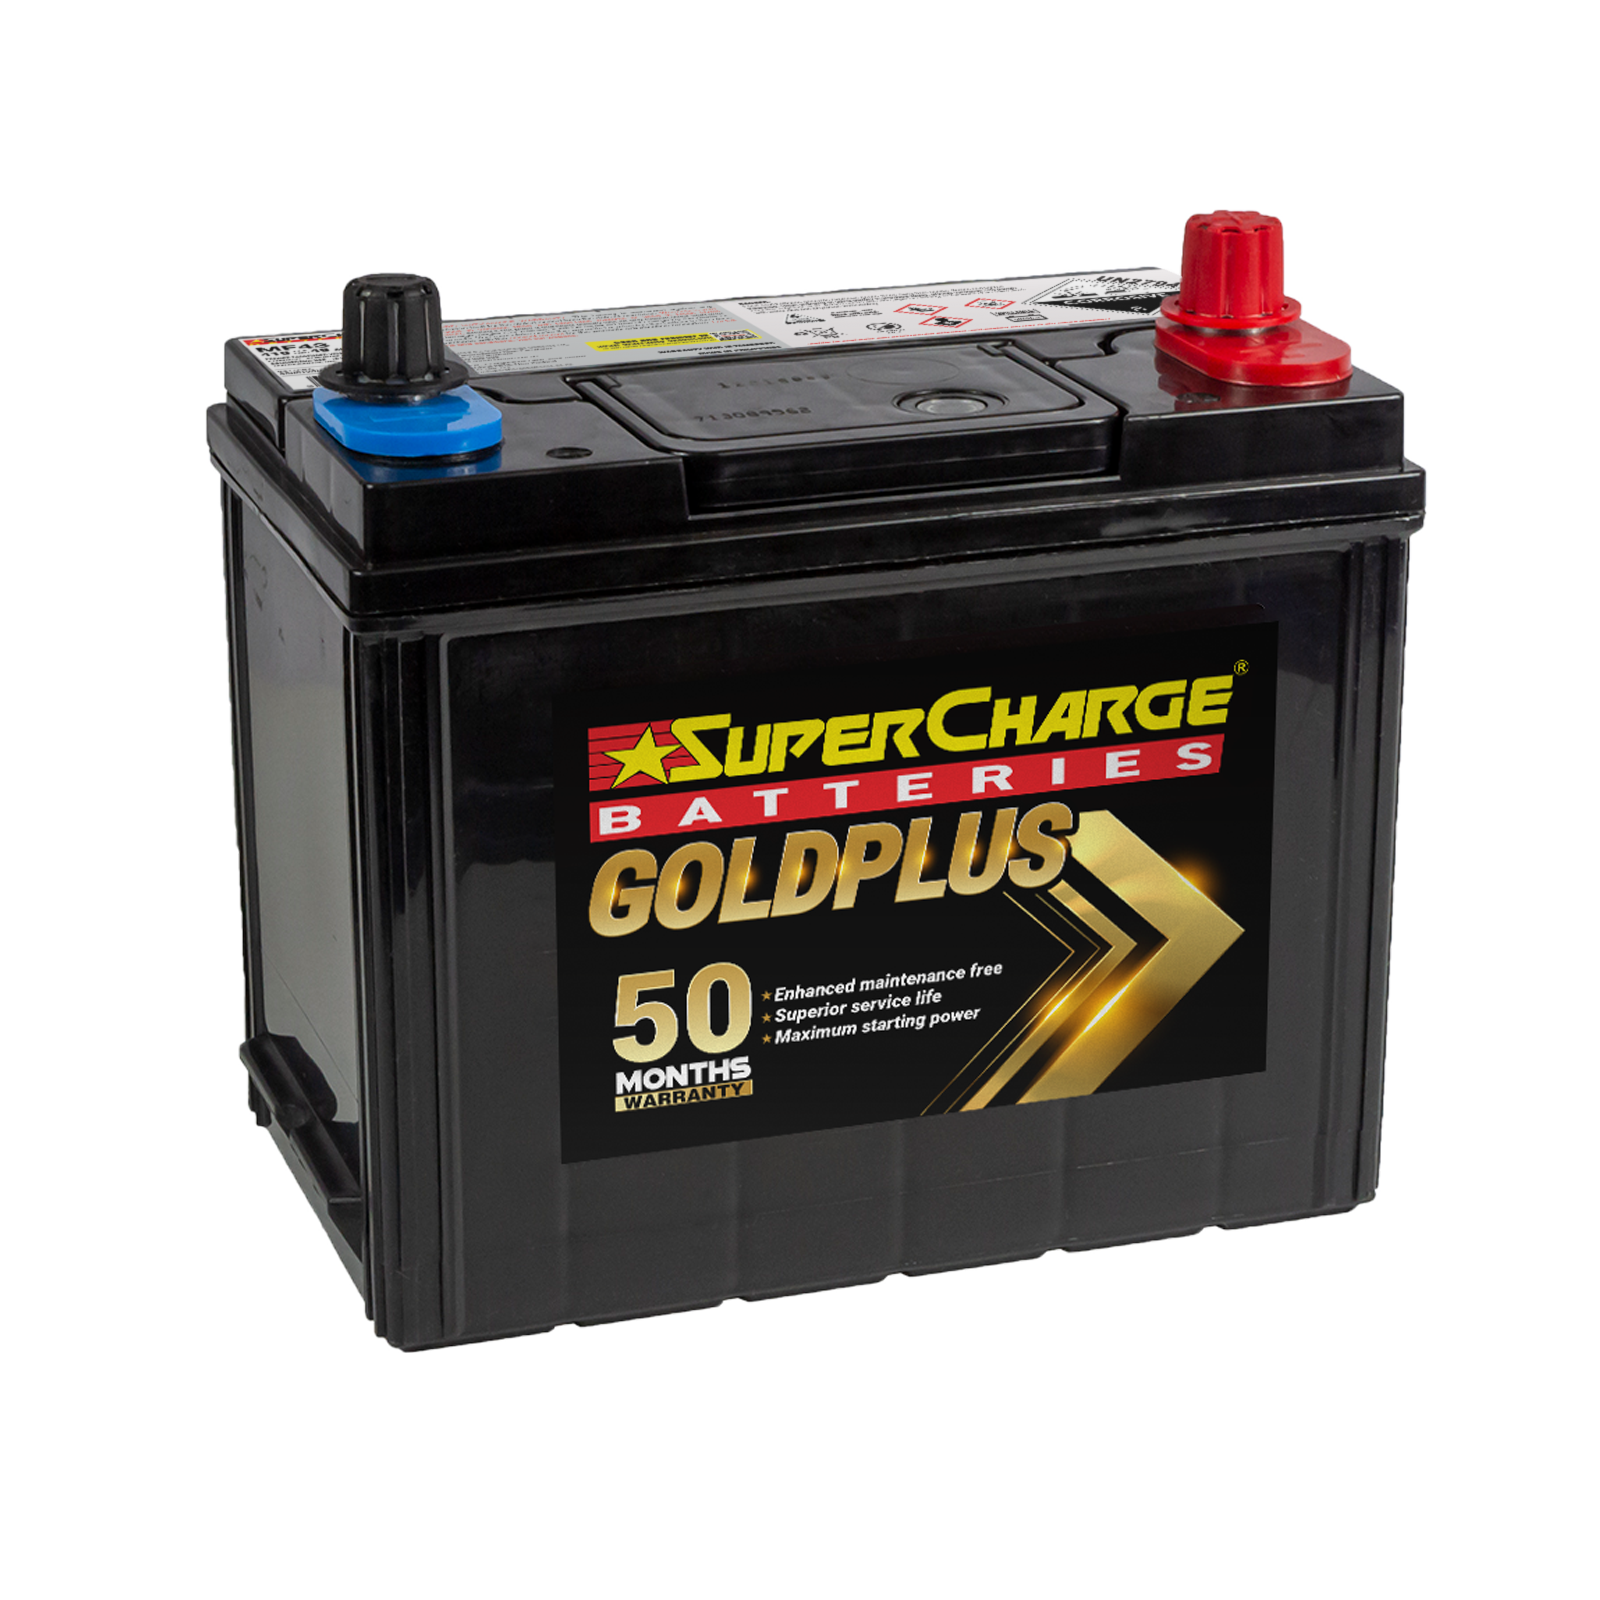 High-Performance MF43 Battery - Versatile Power Solution